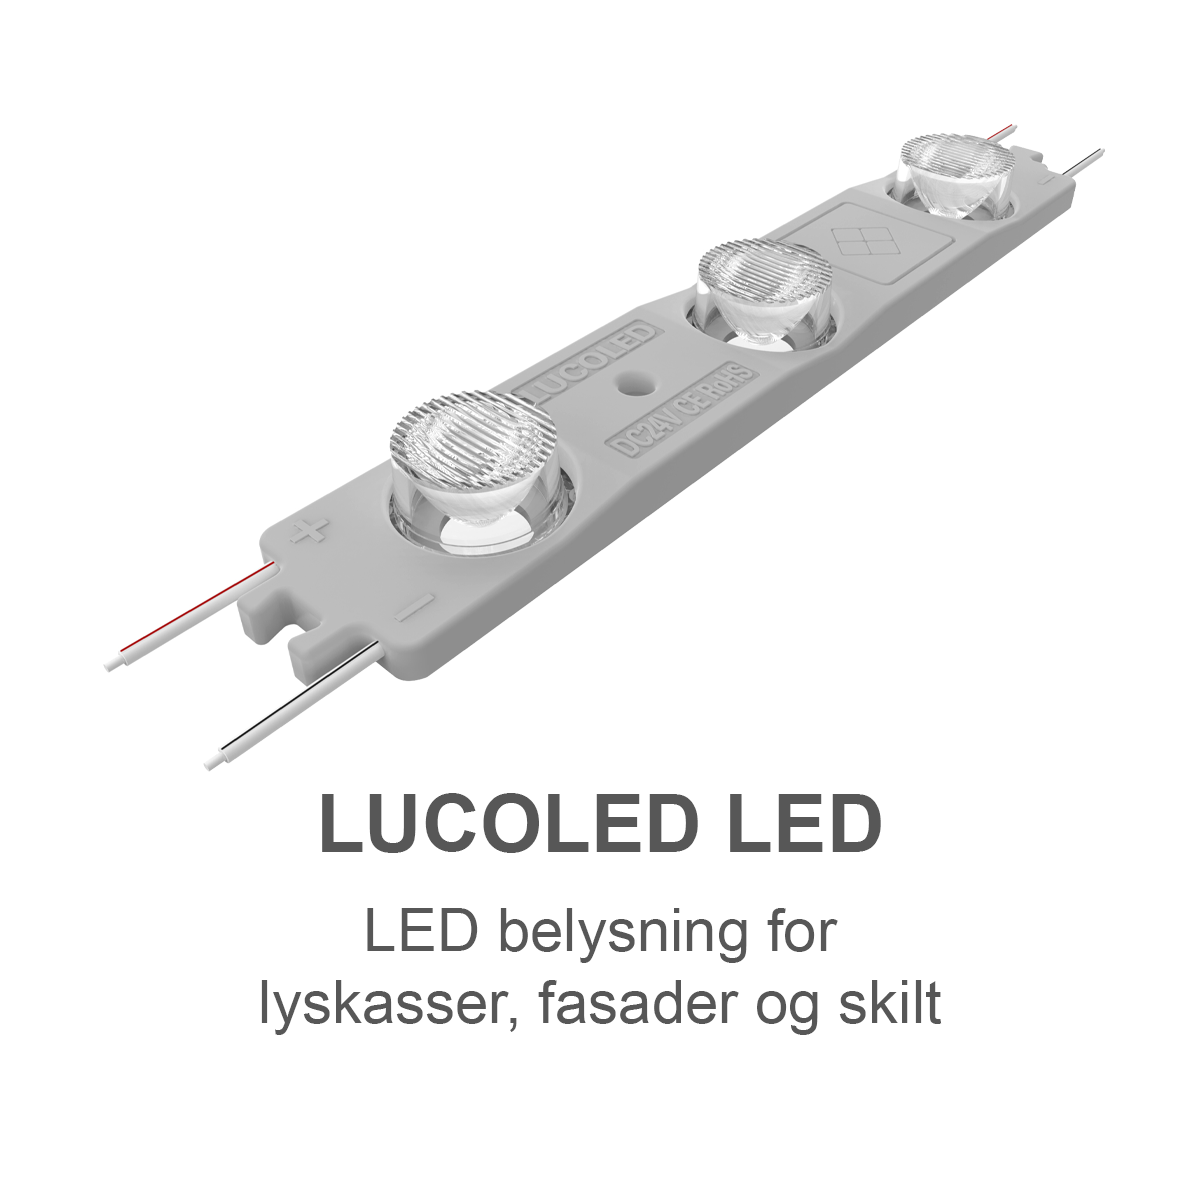 Lucoled LED - LED belysning for lyskasser, fasader og skilt